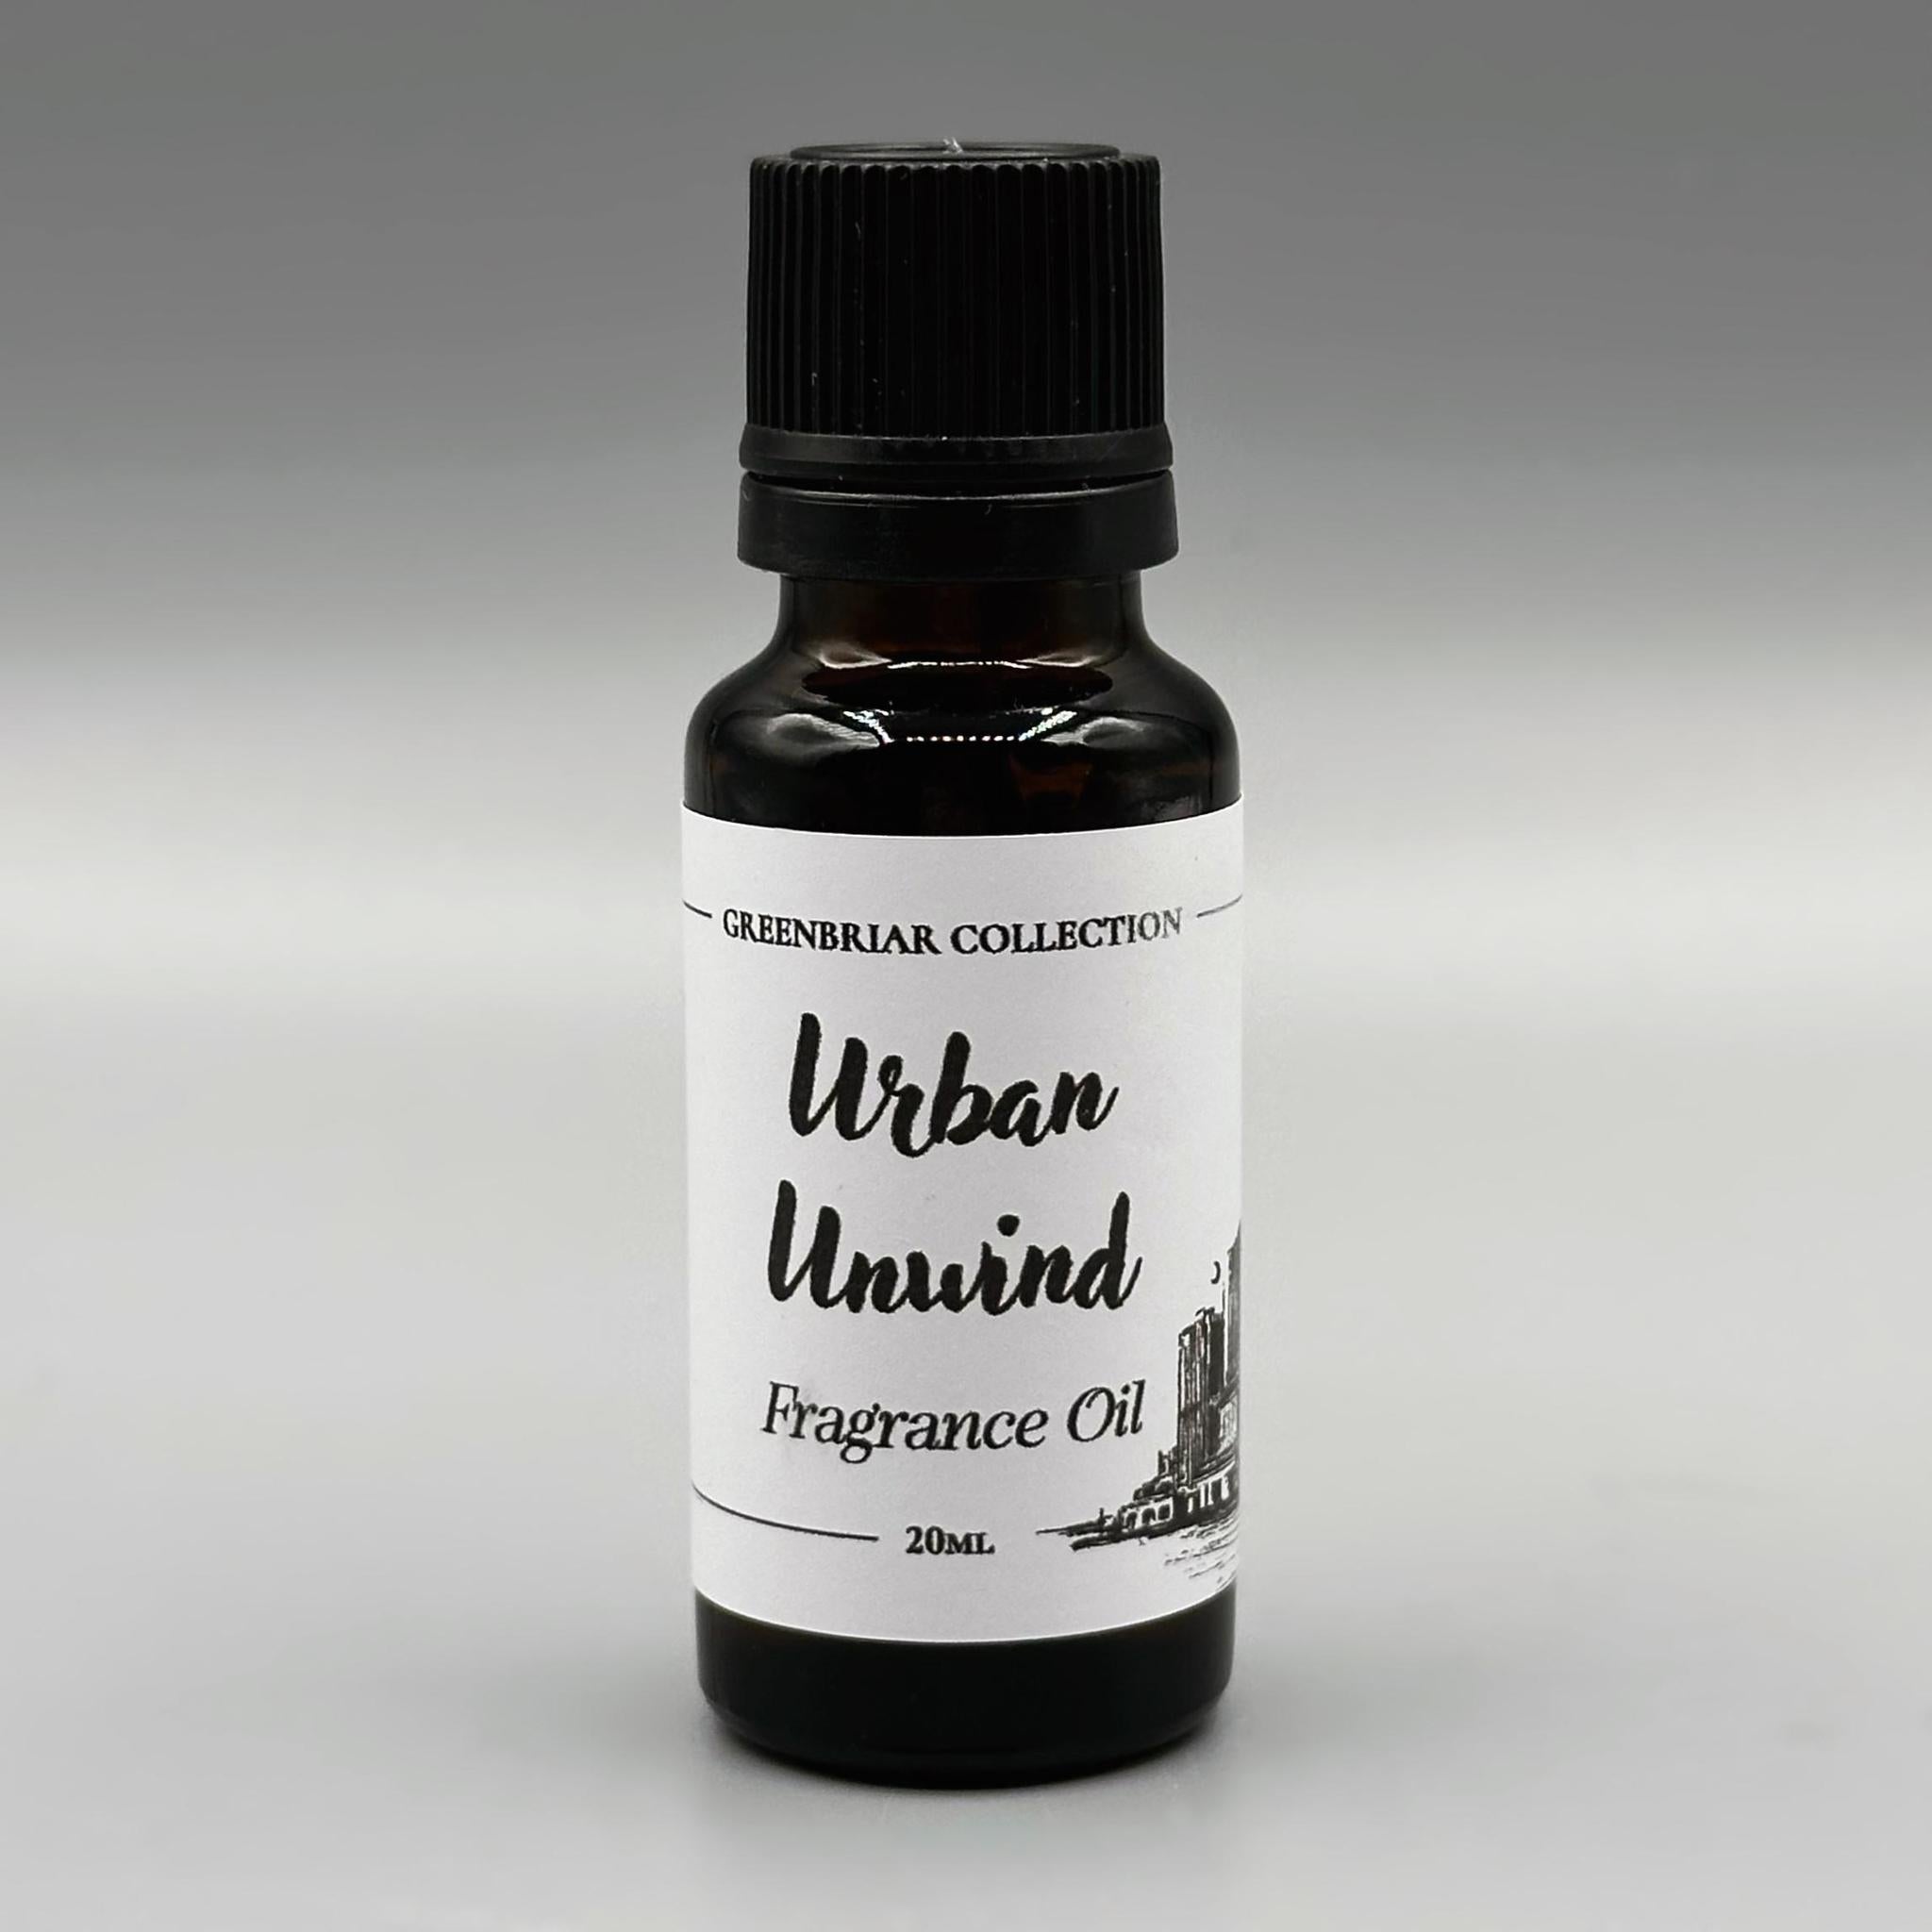 Signature Aromatic Oil Blends